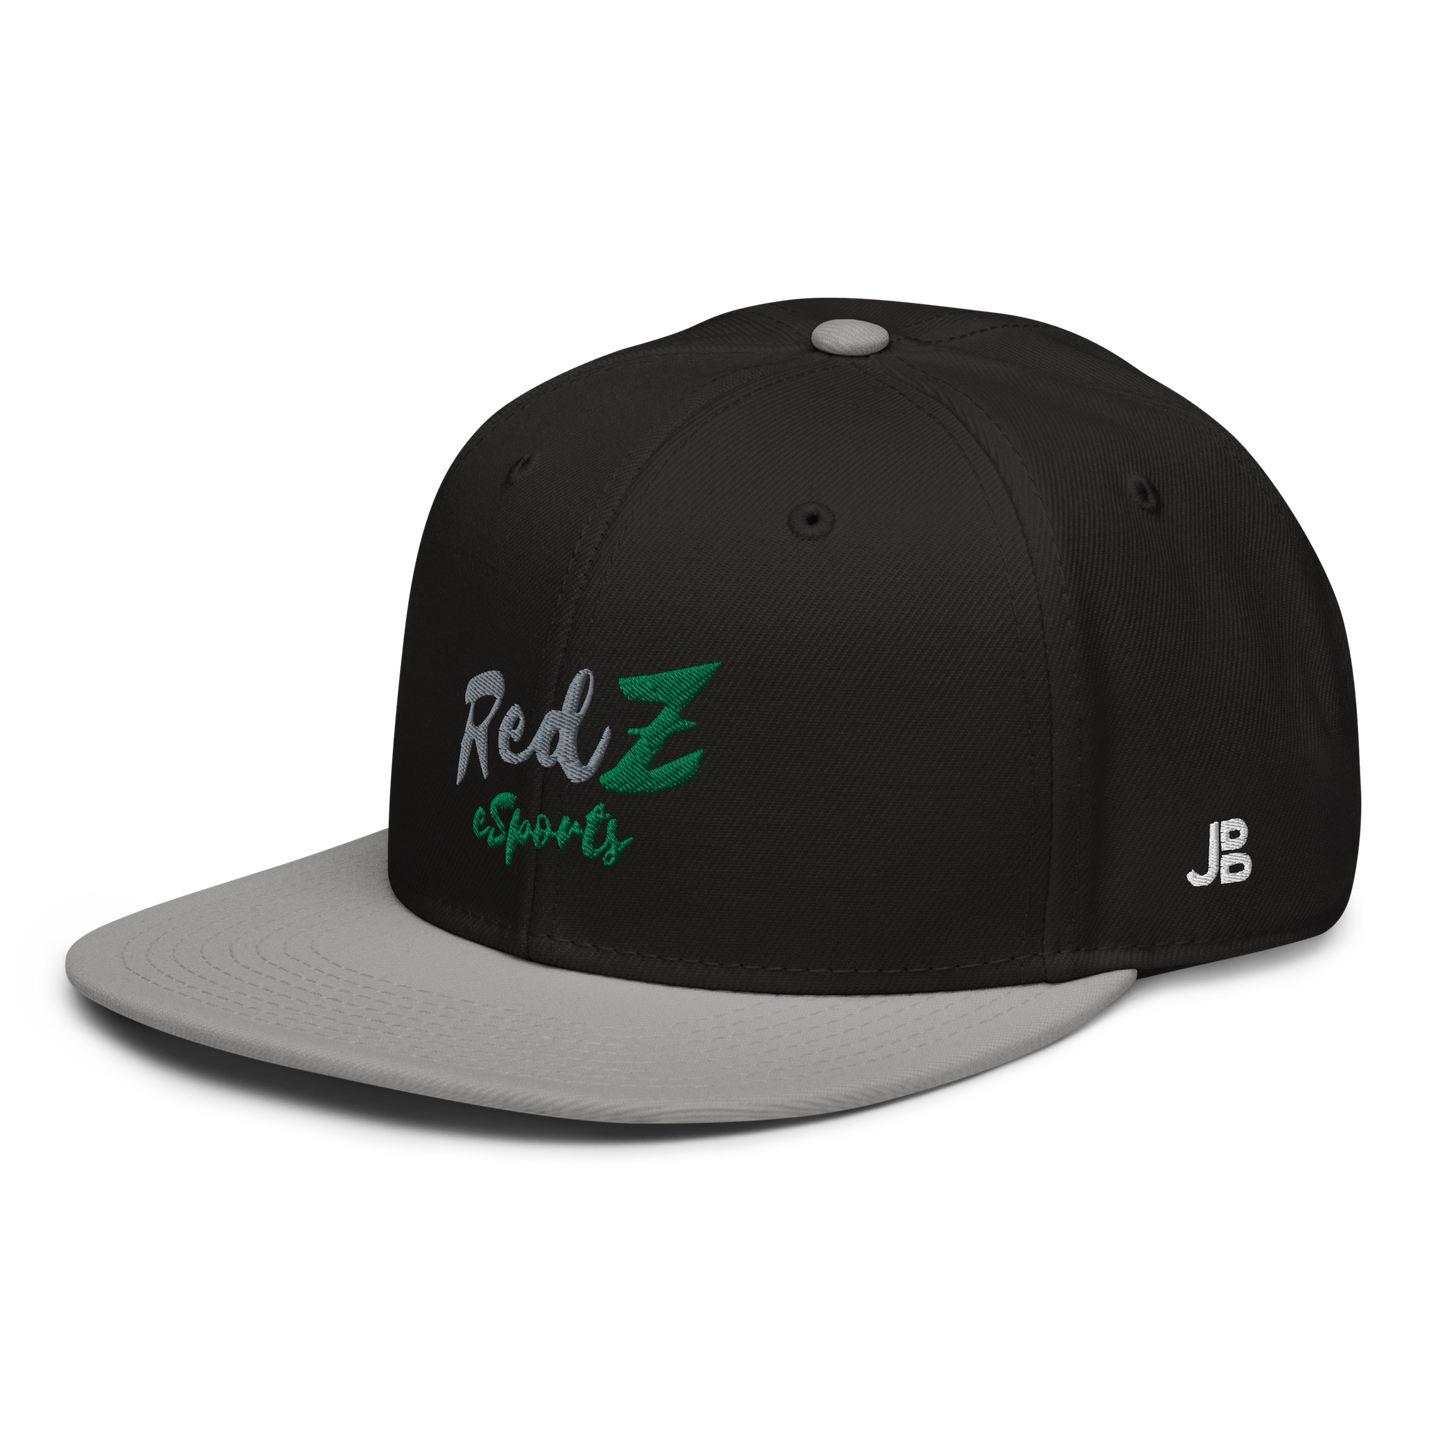 REDZ ESPORTS - Snapback Cap Green